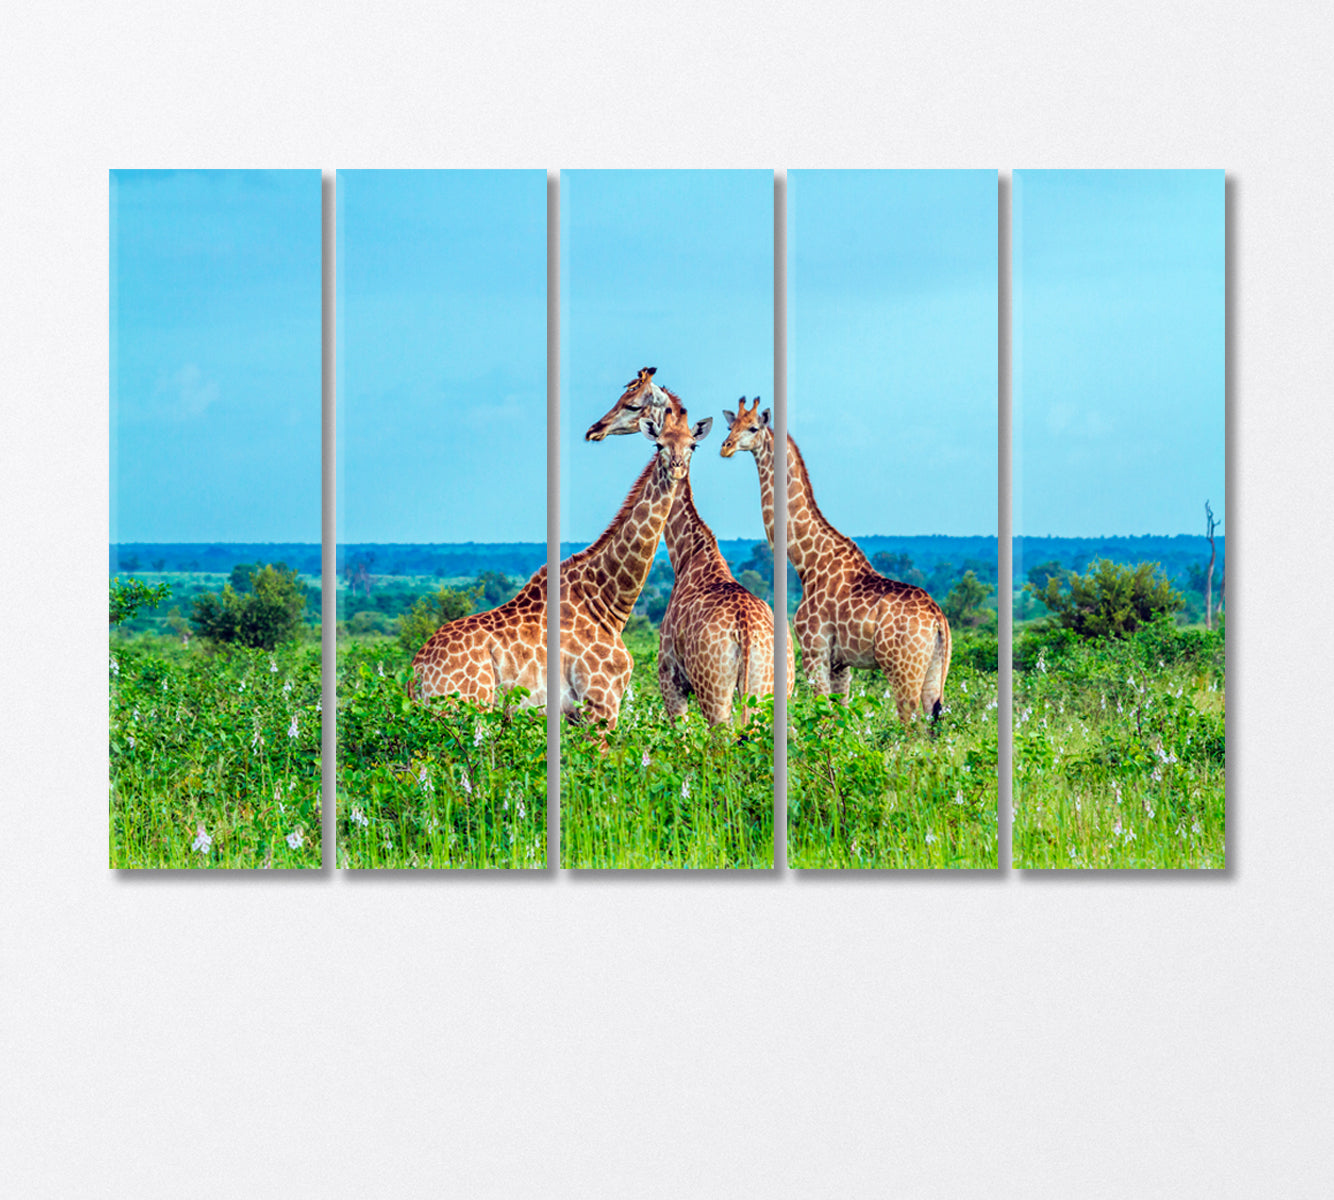 Three Giraffes in Kruger National Park Africa Canvas Print-Canvas Print-CetArt-5 Panels-36x24 inches-CetArt